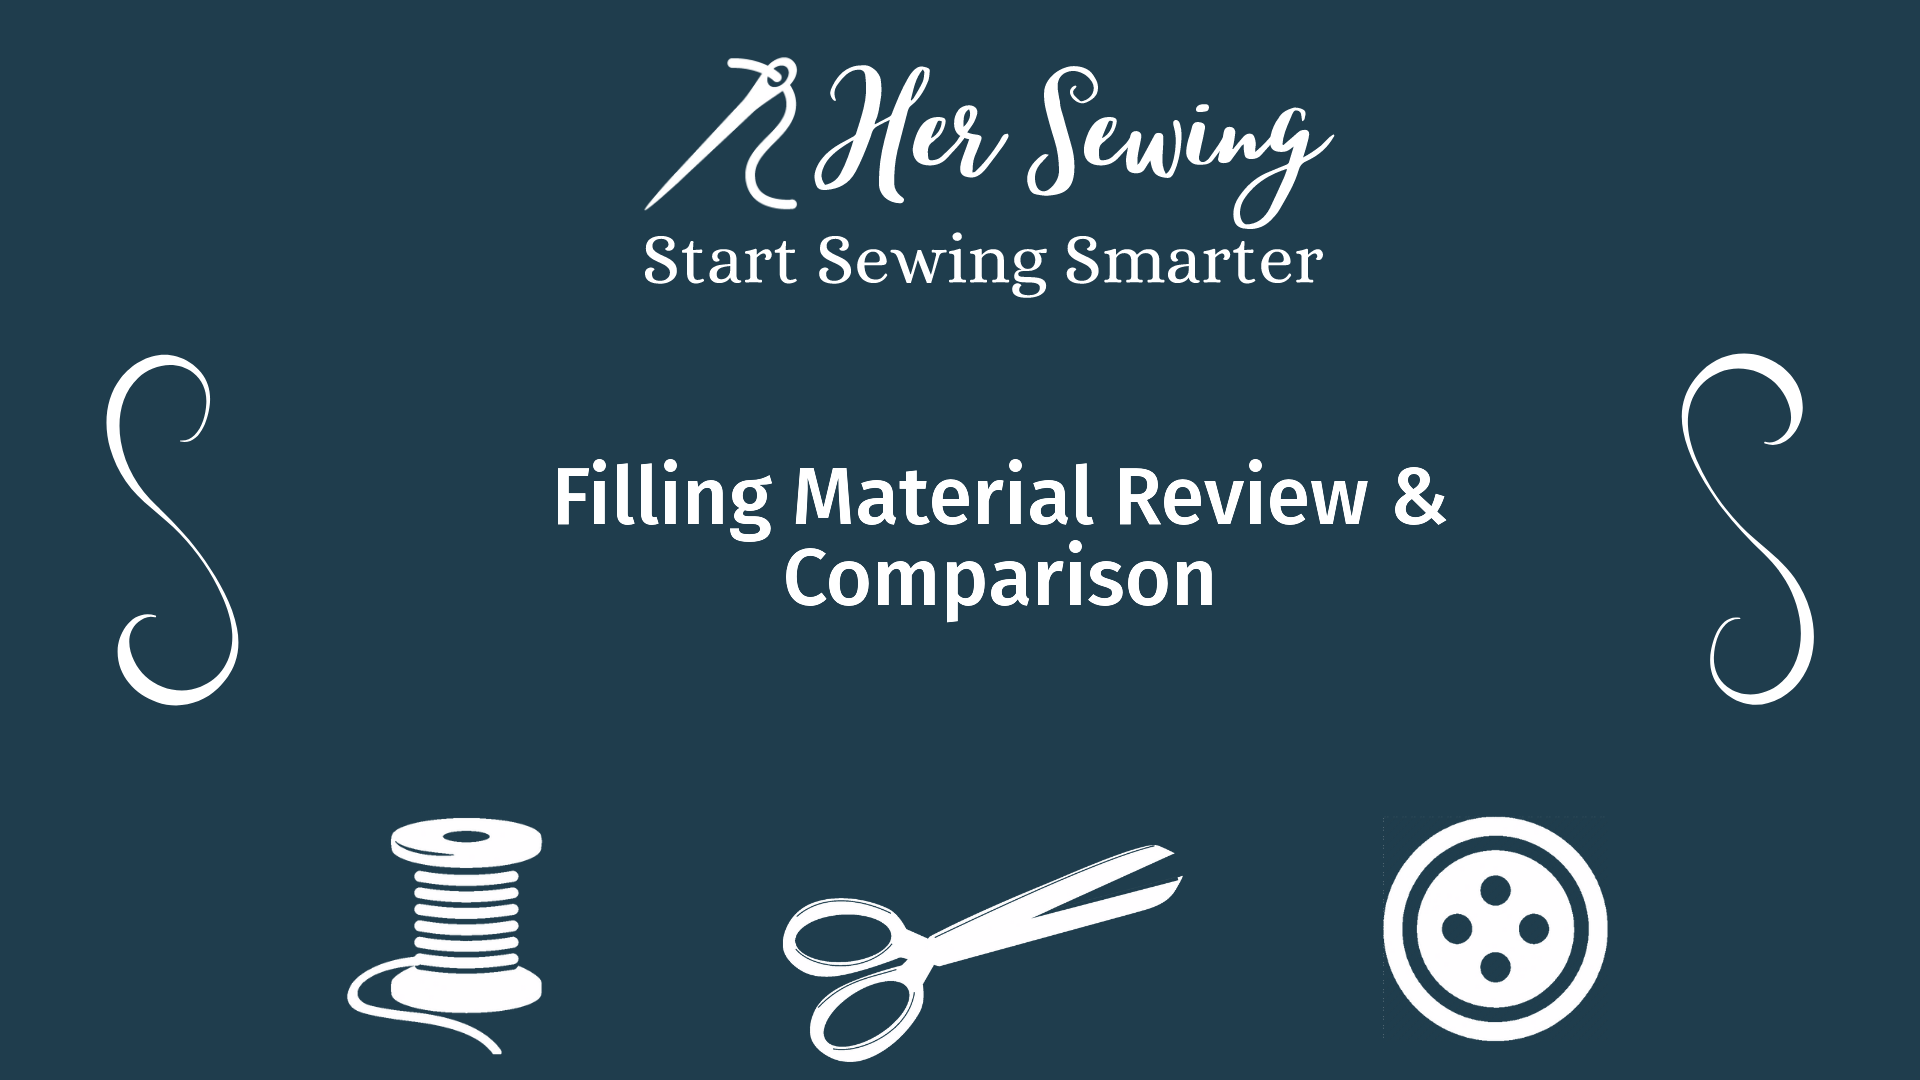 Filling Material Review & Comparison